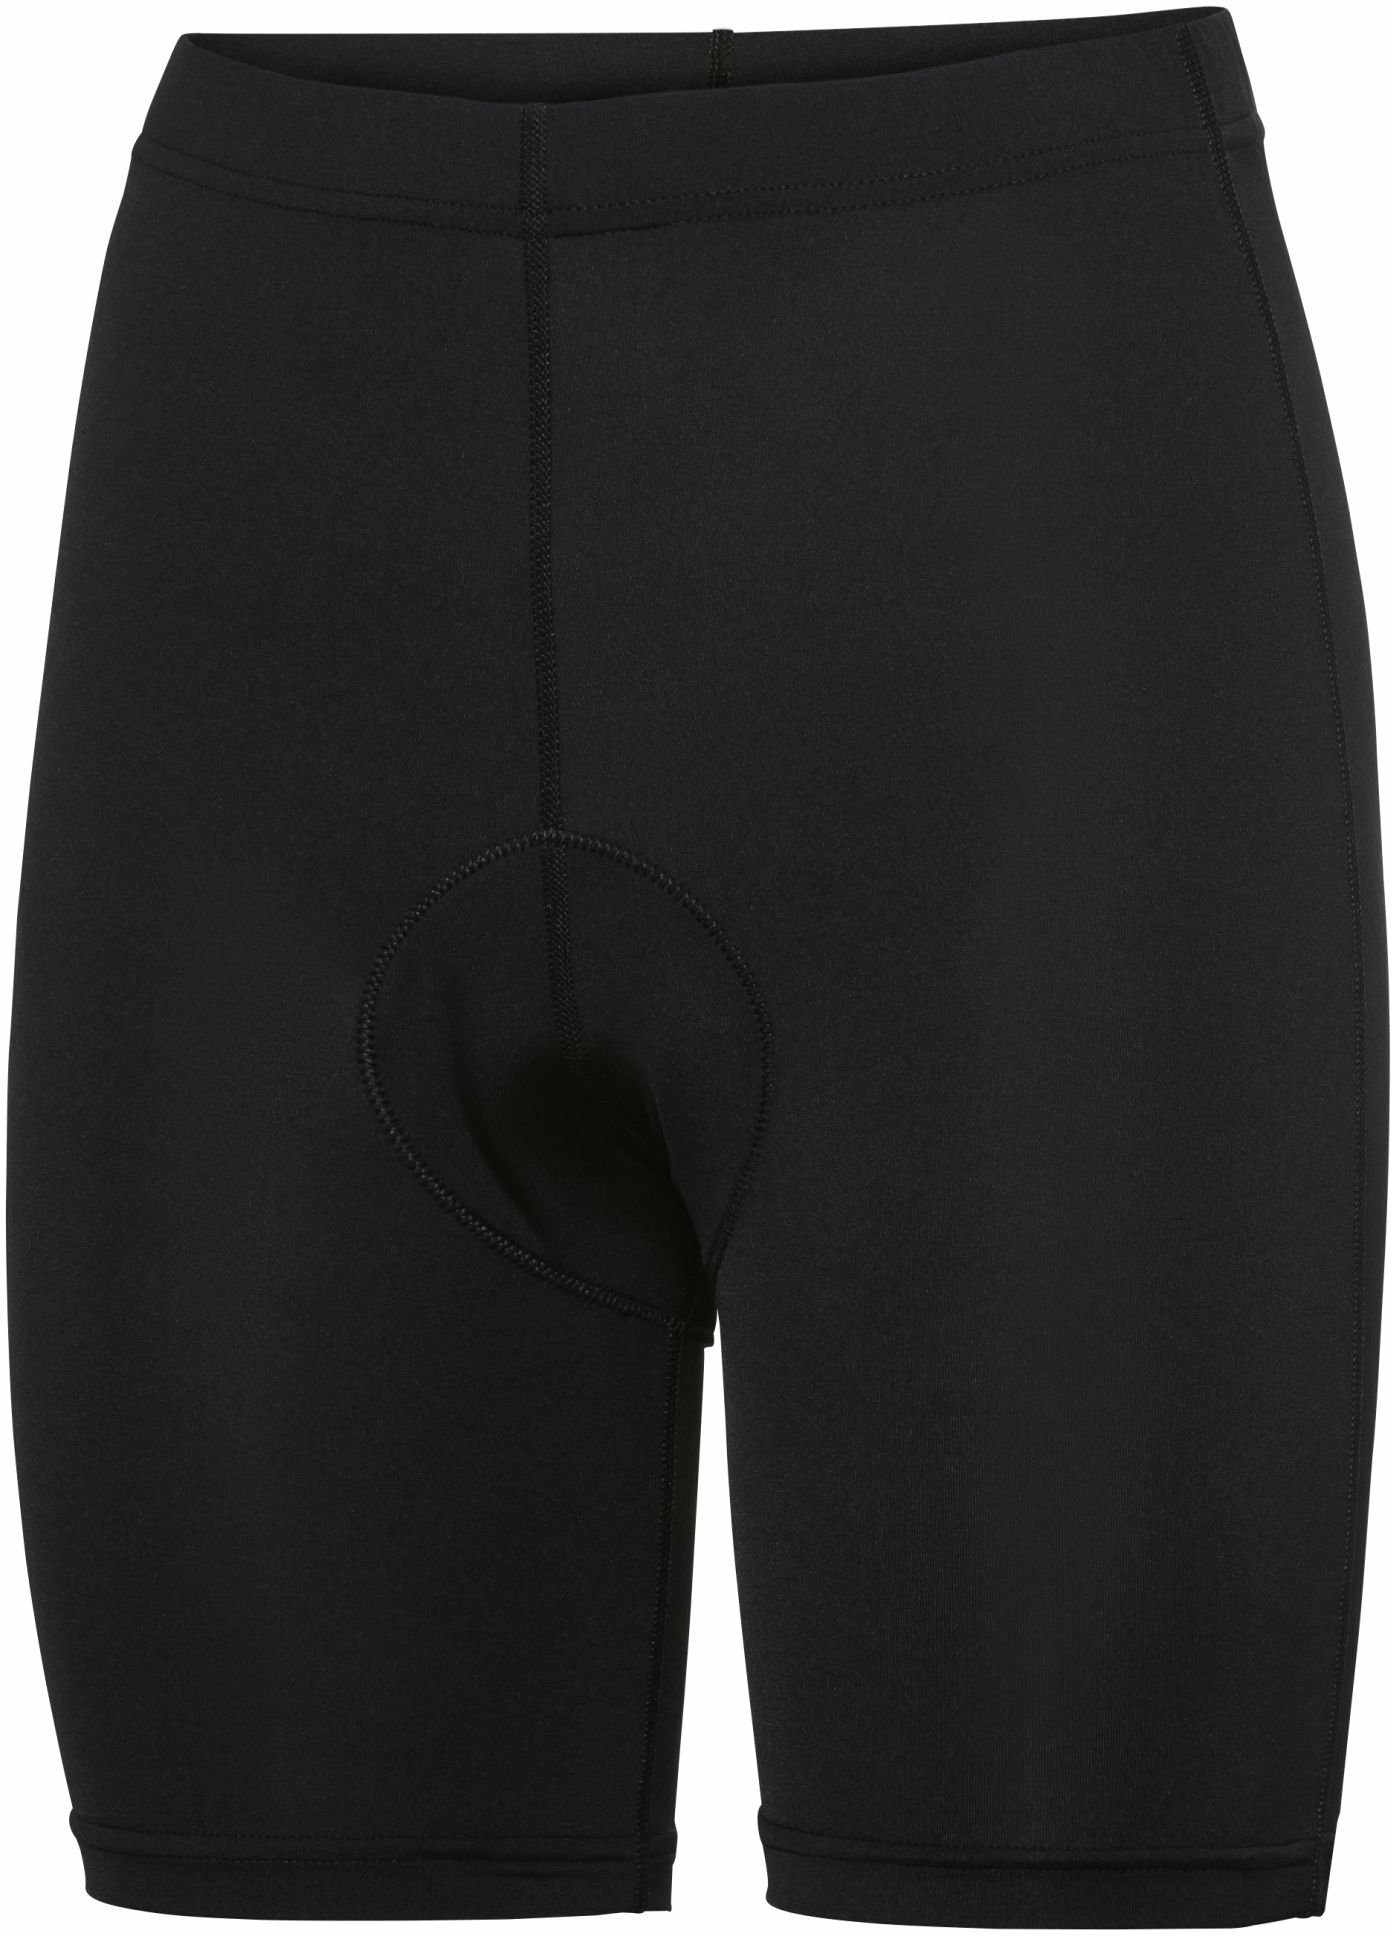 Bekleidung/Unterwäsche: Apura  Damen Unterhose Baselayer Shorts Pura 3XL 